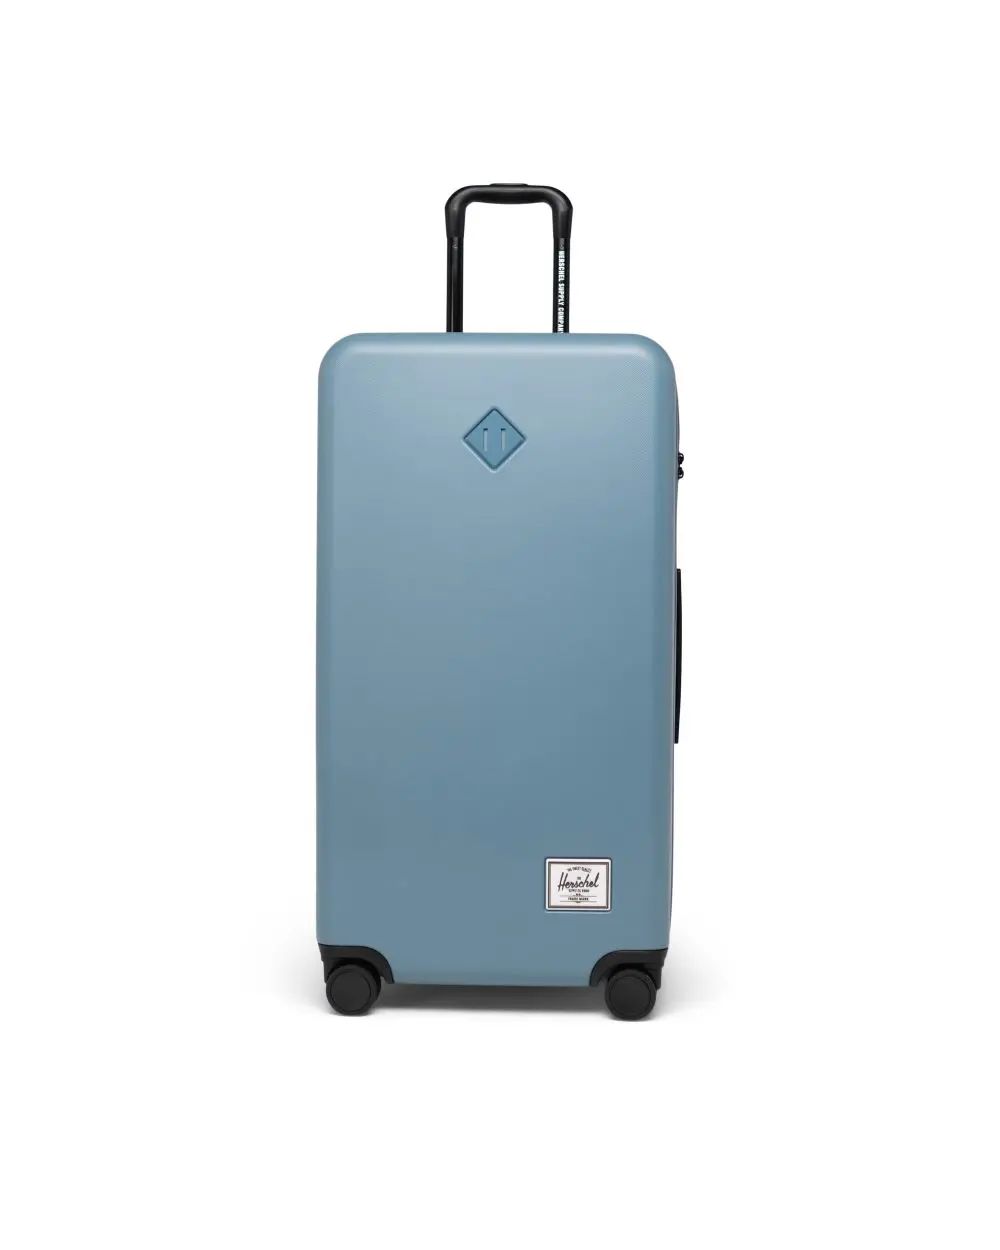 Herschel Heritage™ Hardshell Large Luggage | Herschel Supply Company